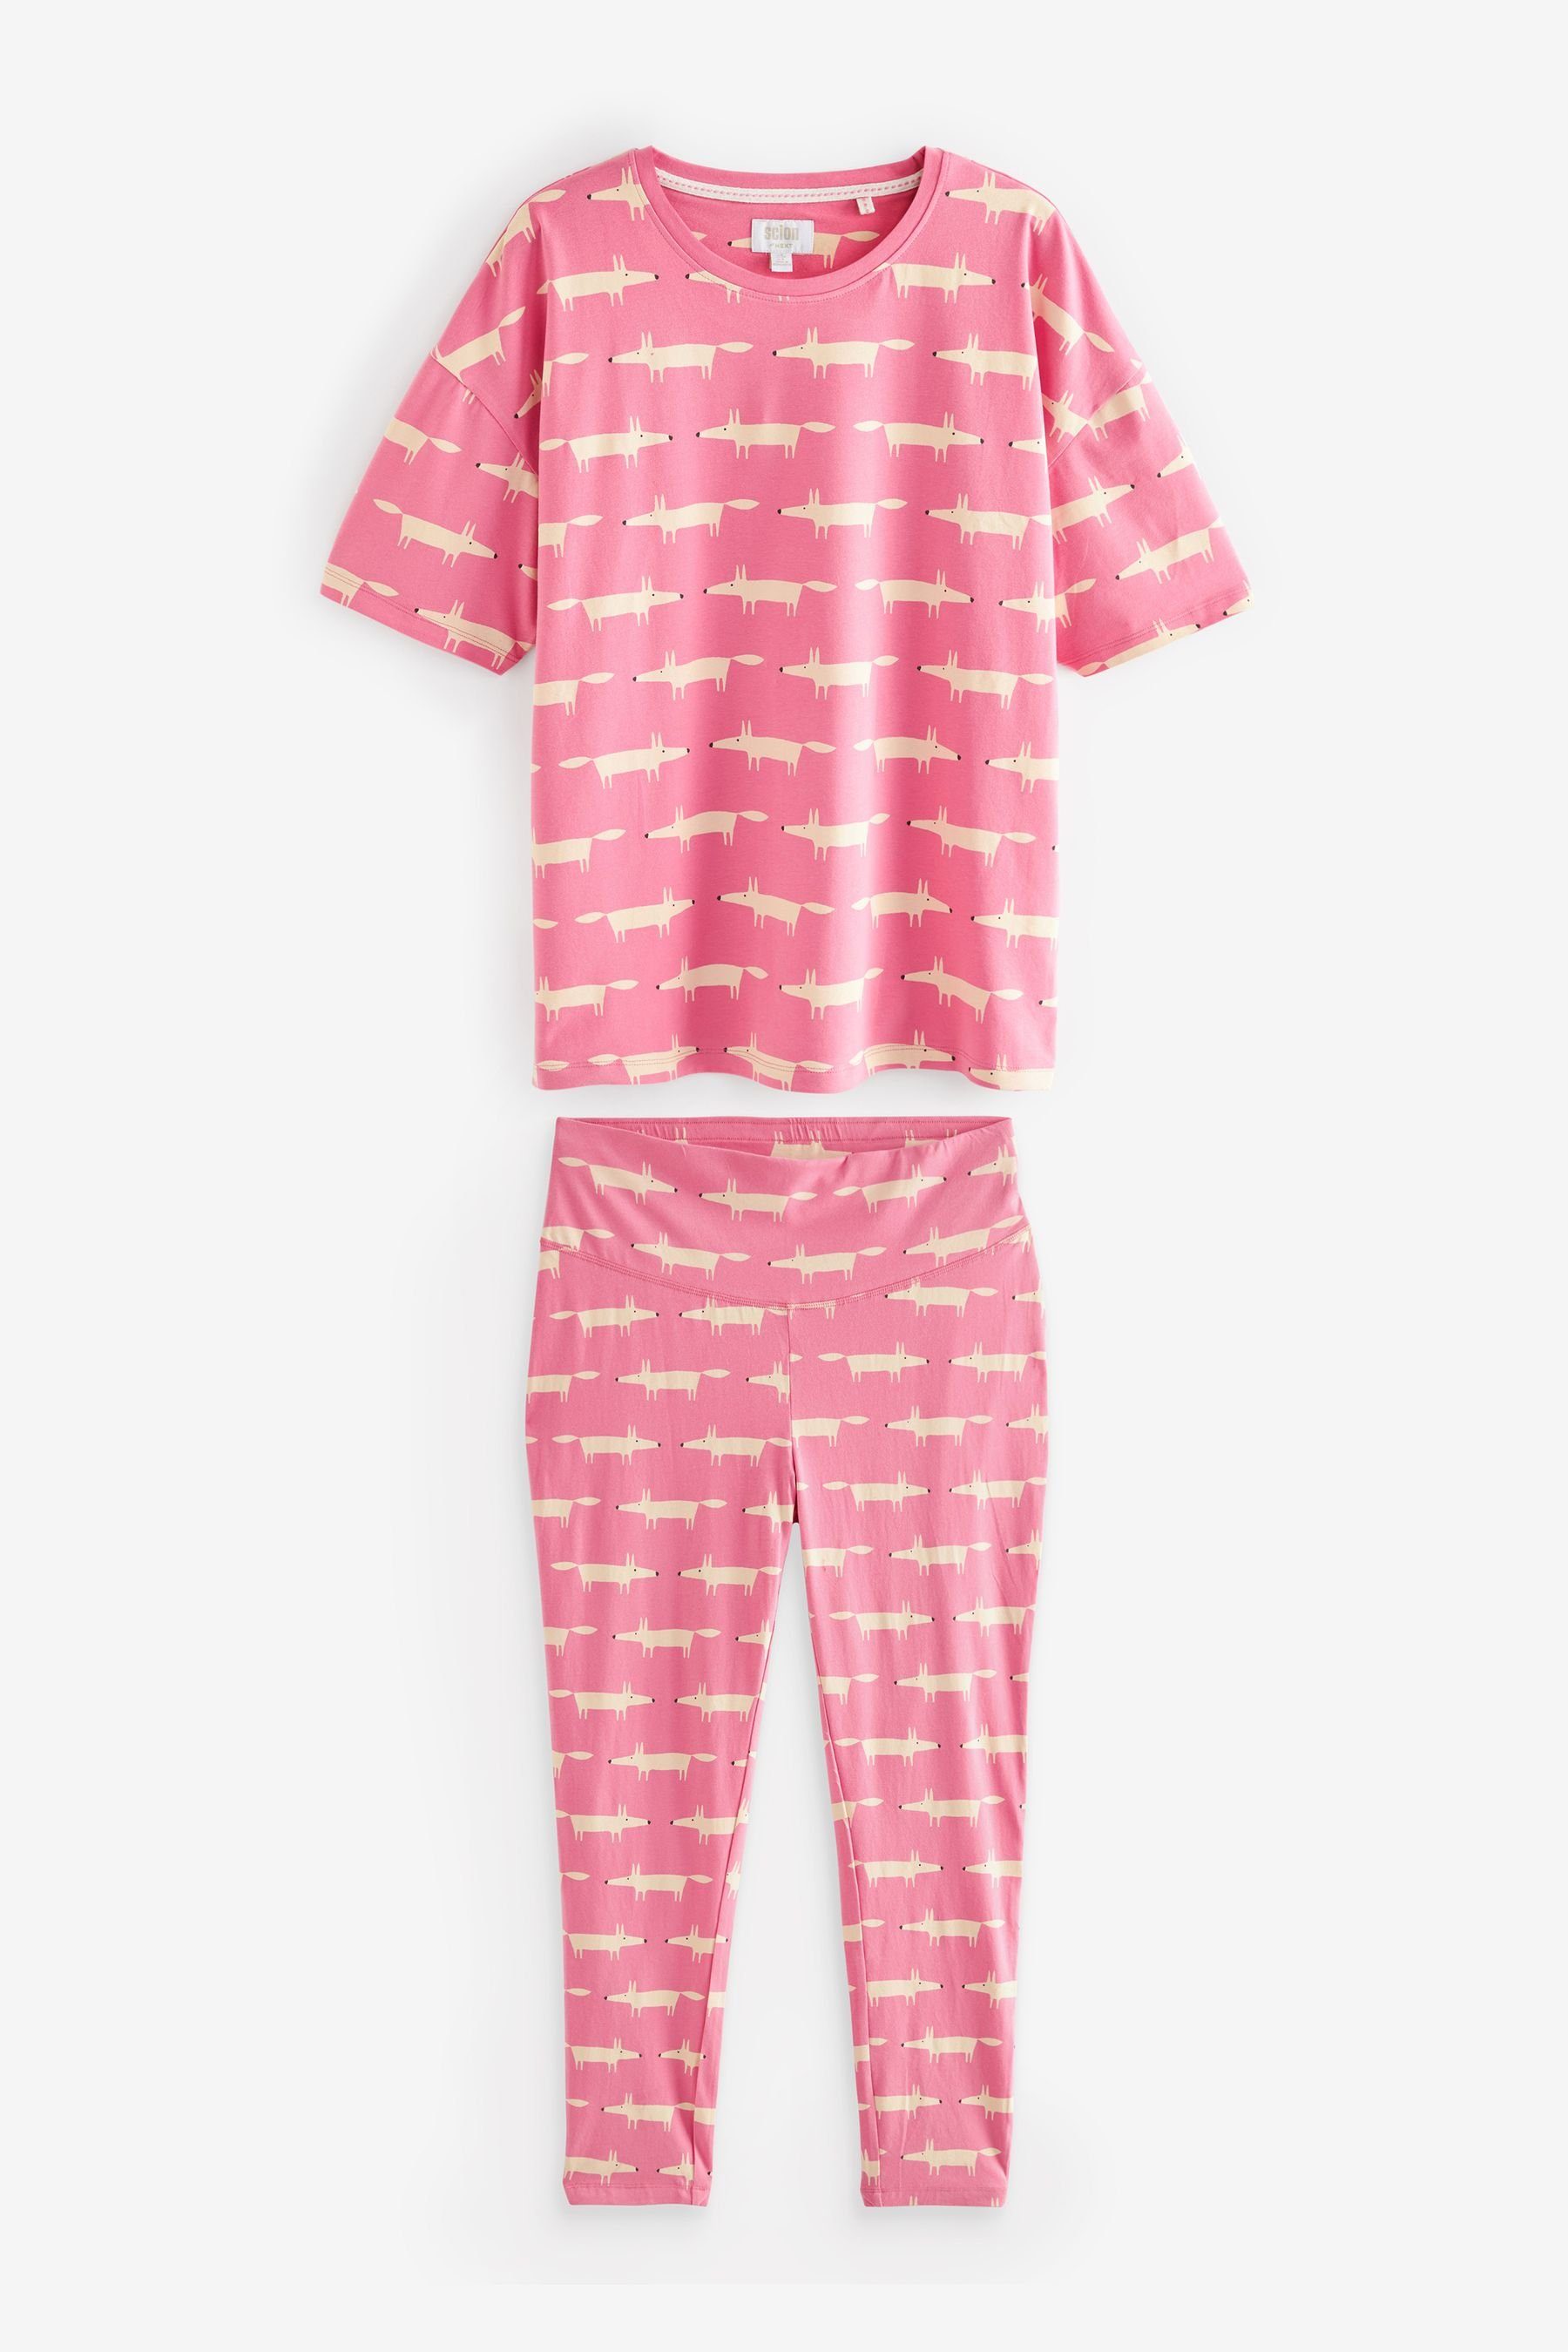 Next Pyjama Mr (2 Fox mit Schlafanzug at tlg) Scion Leggings Next